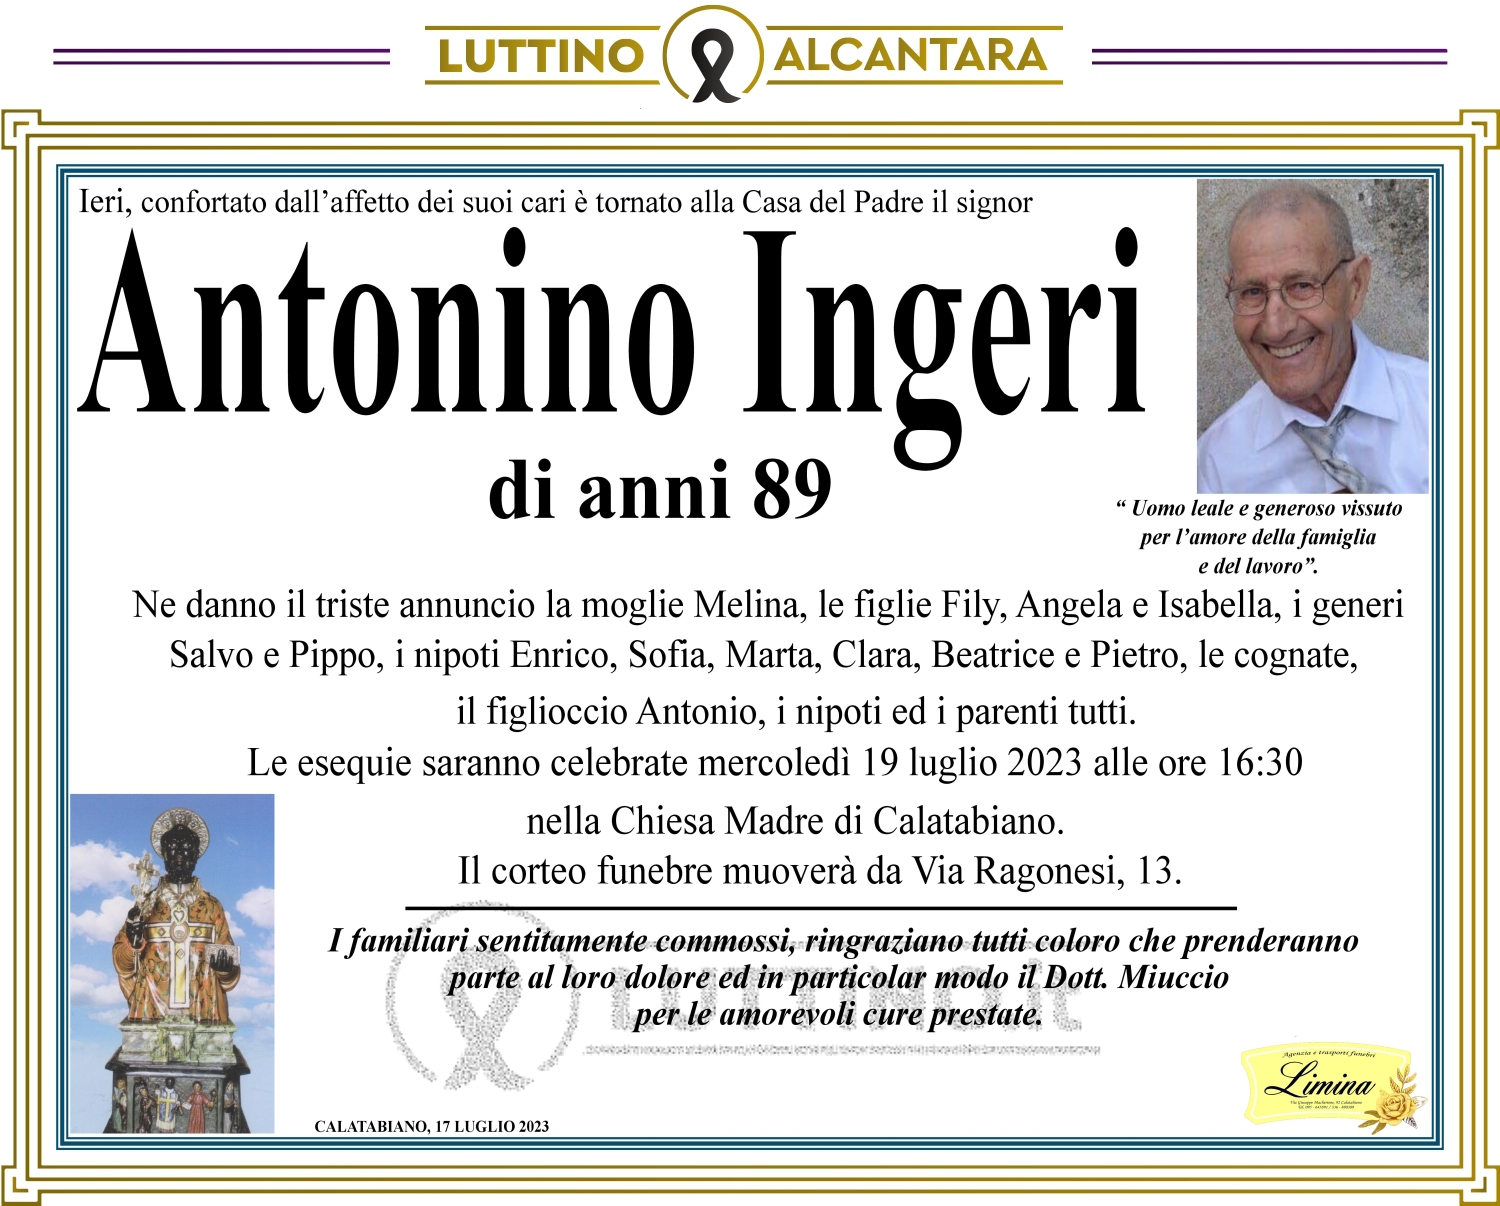 Antonino Ingeri